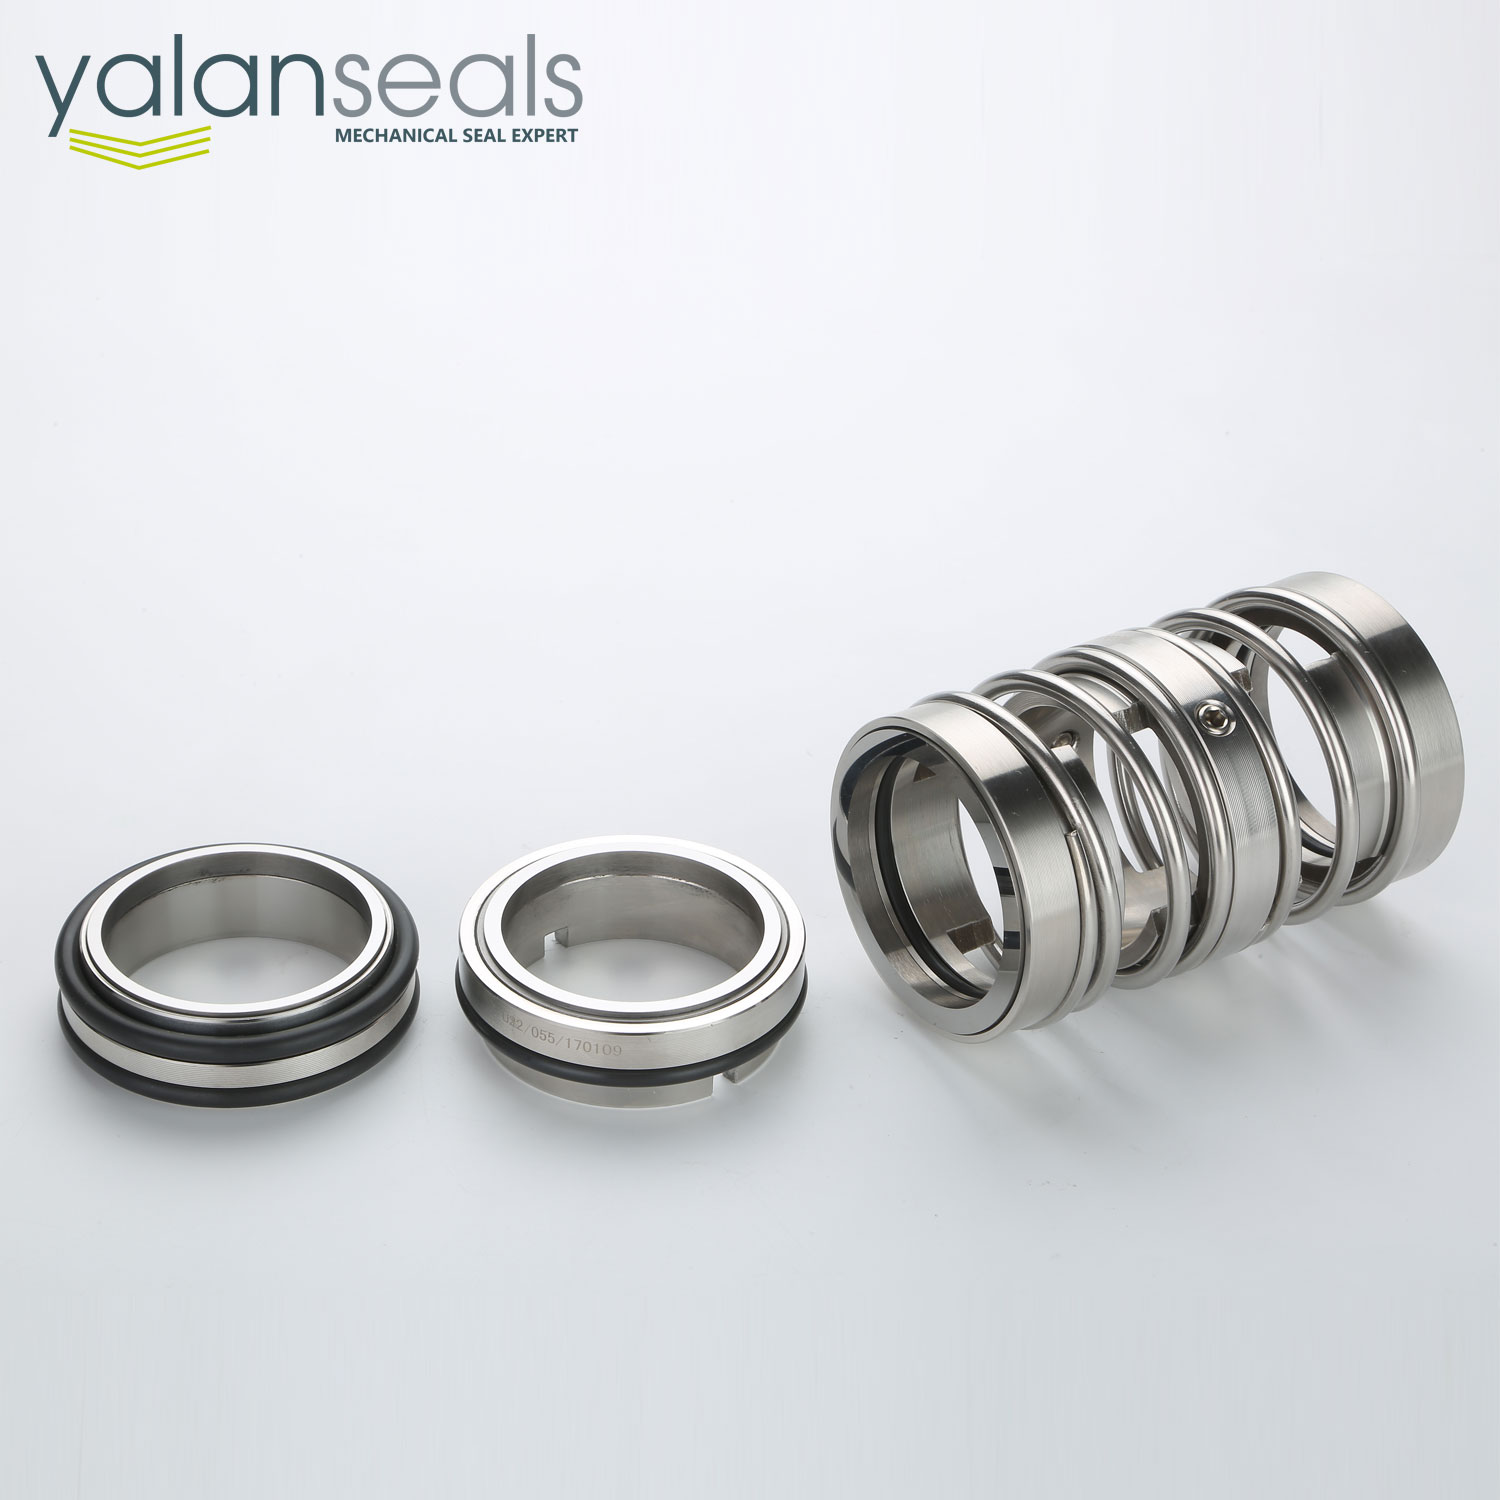 YALAN U208-D Single Spring Double Mechanical Seal for Food Biochemical Process Pumps